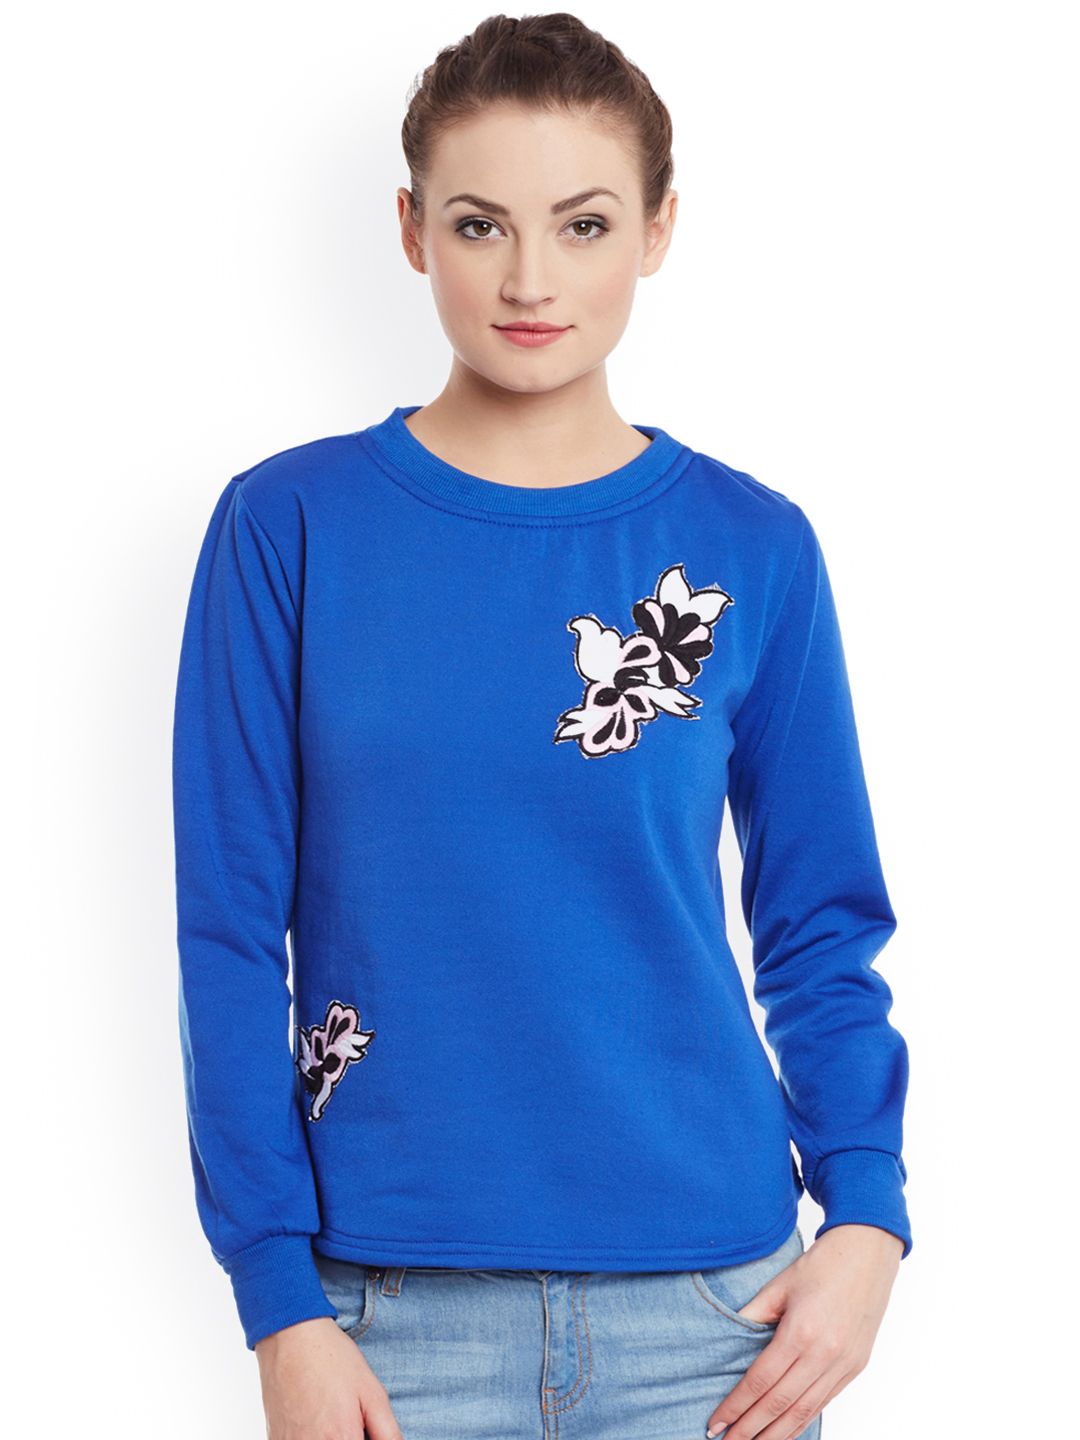 Belle Fille Blue Sweatshirt Price in India